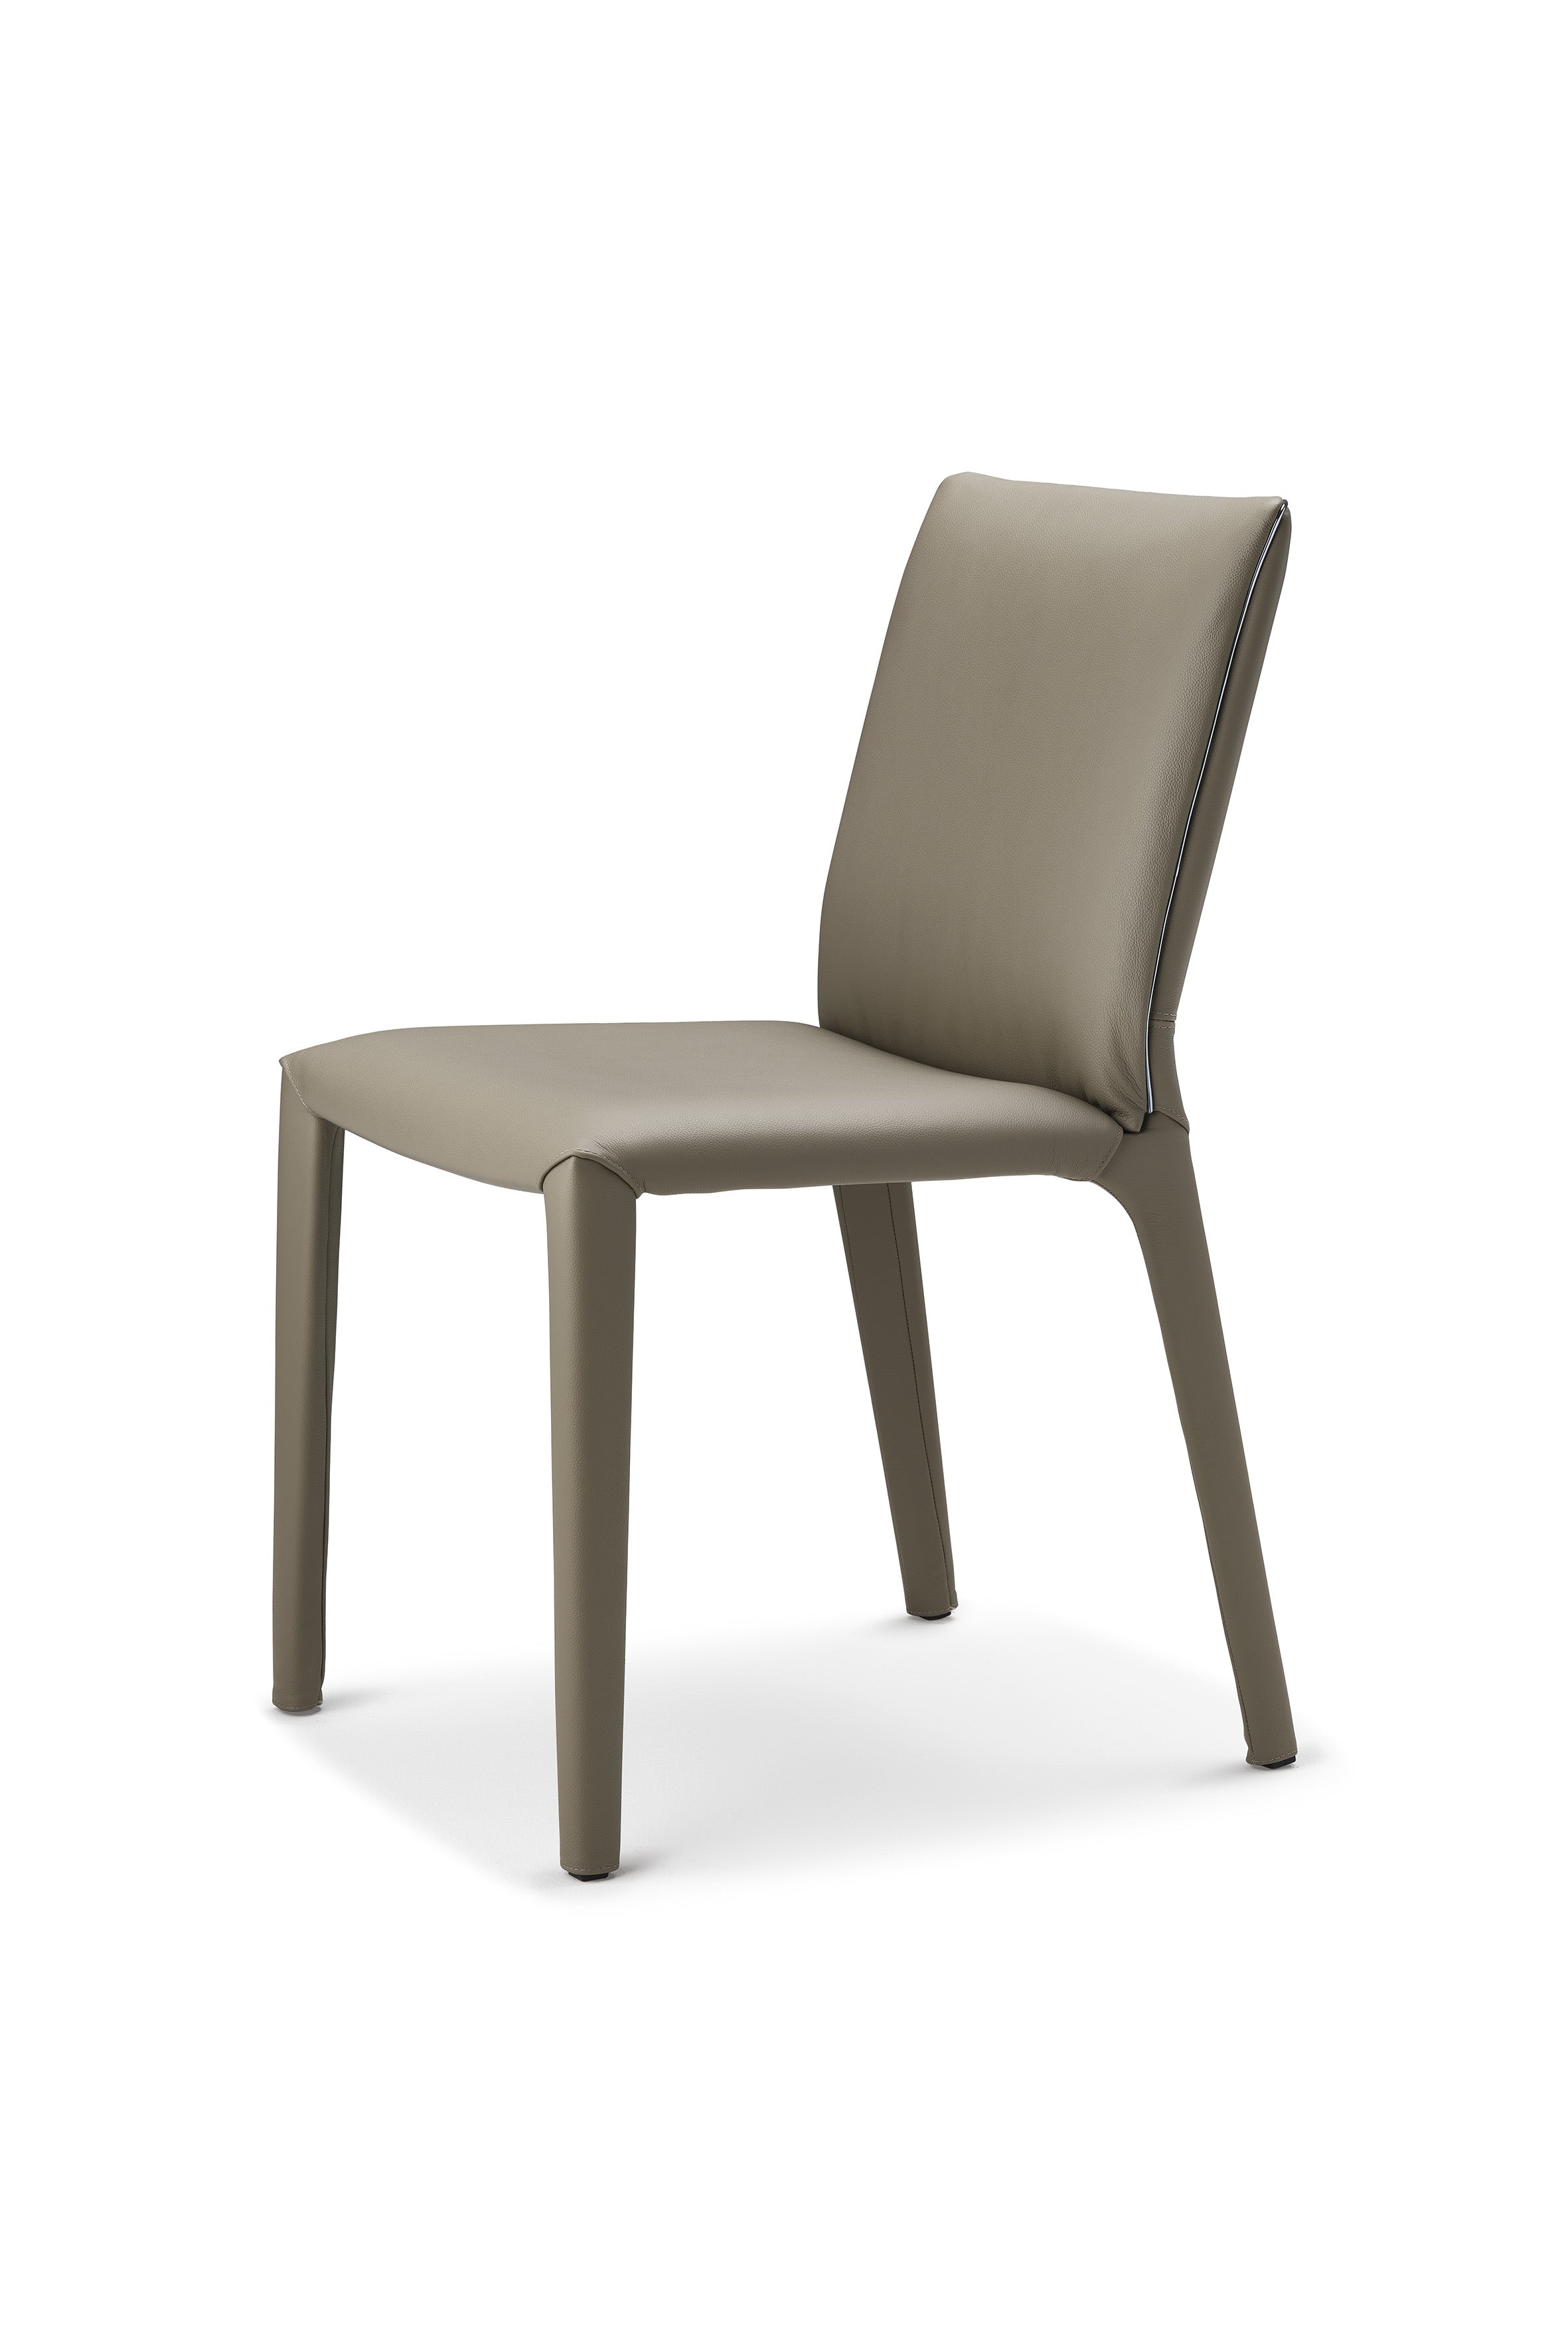 cattelan italia penelope Upholstered Chair with Steel Frame